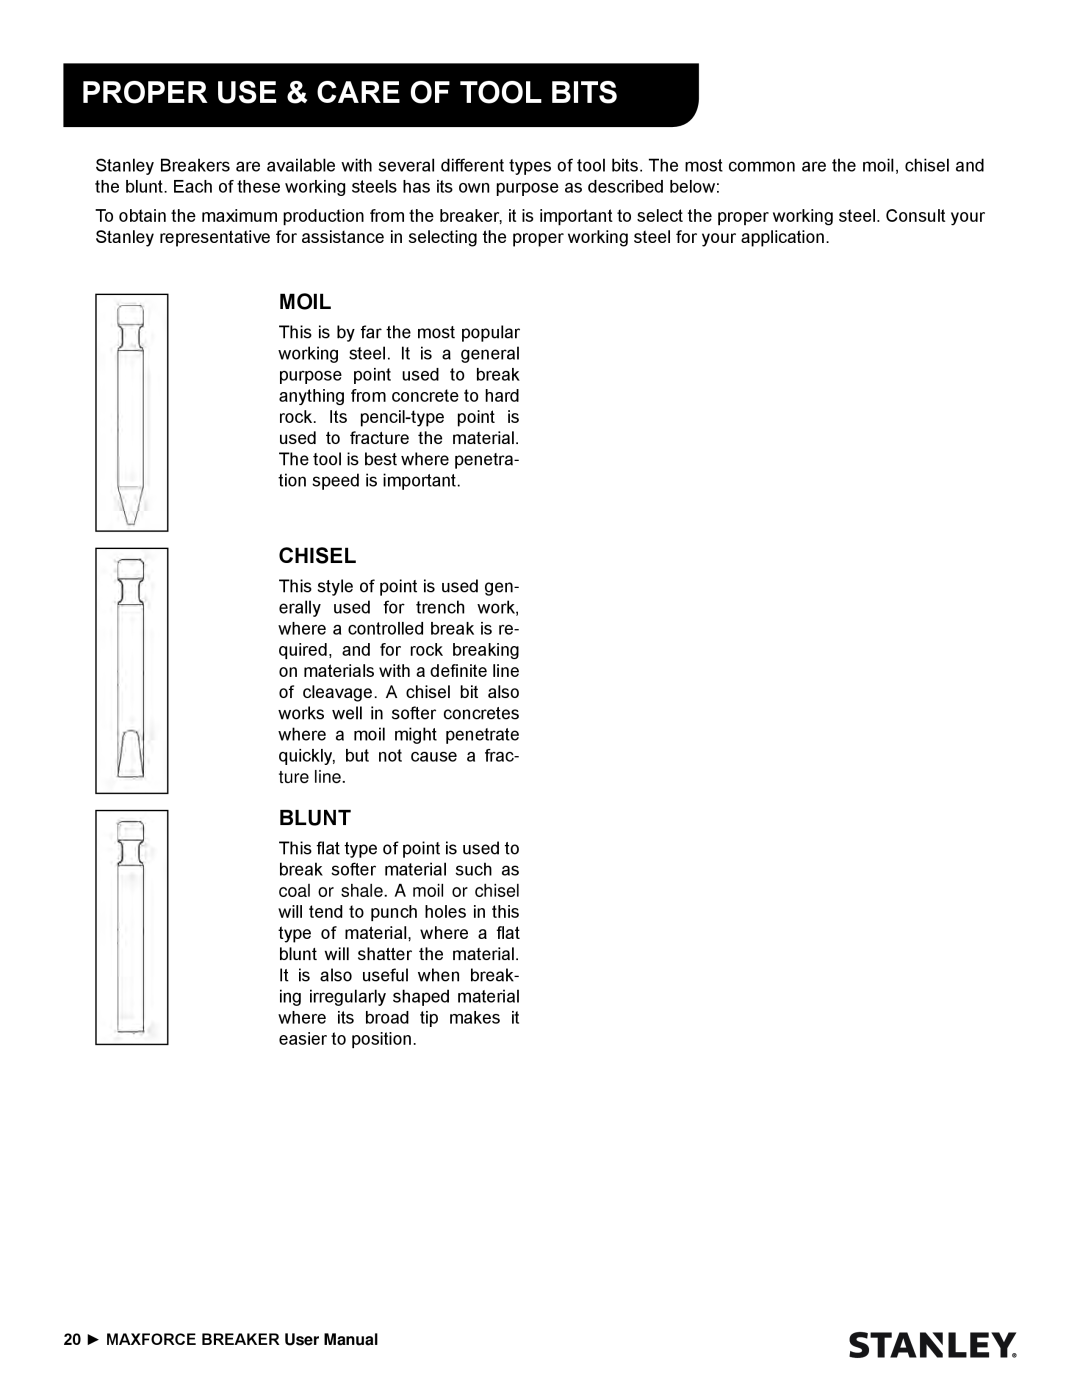 Stanley Black & Decker MBX138 thru MBX608 user manual Moil, Chisel, Blunt, Proper Use & Care Of Tool Bits 